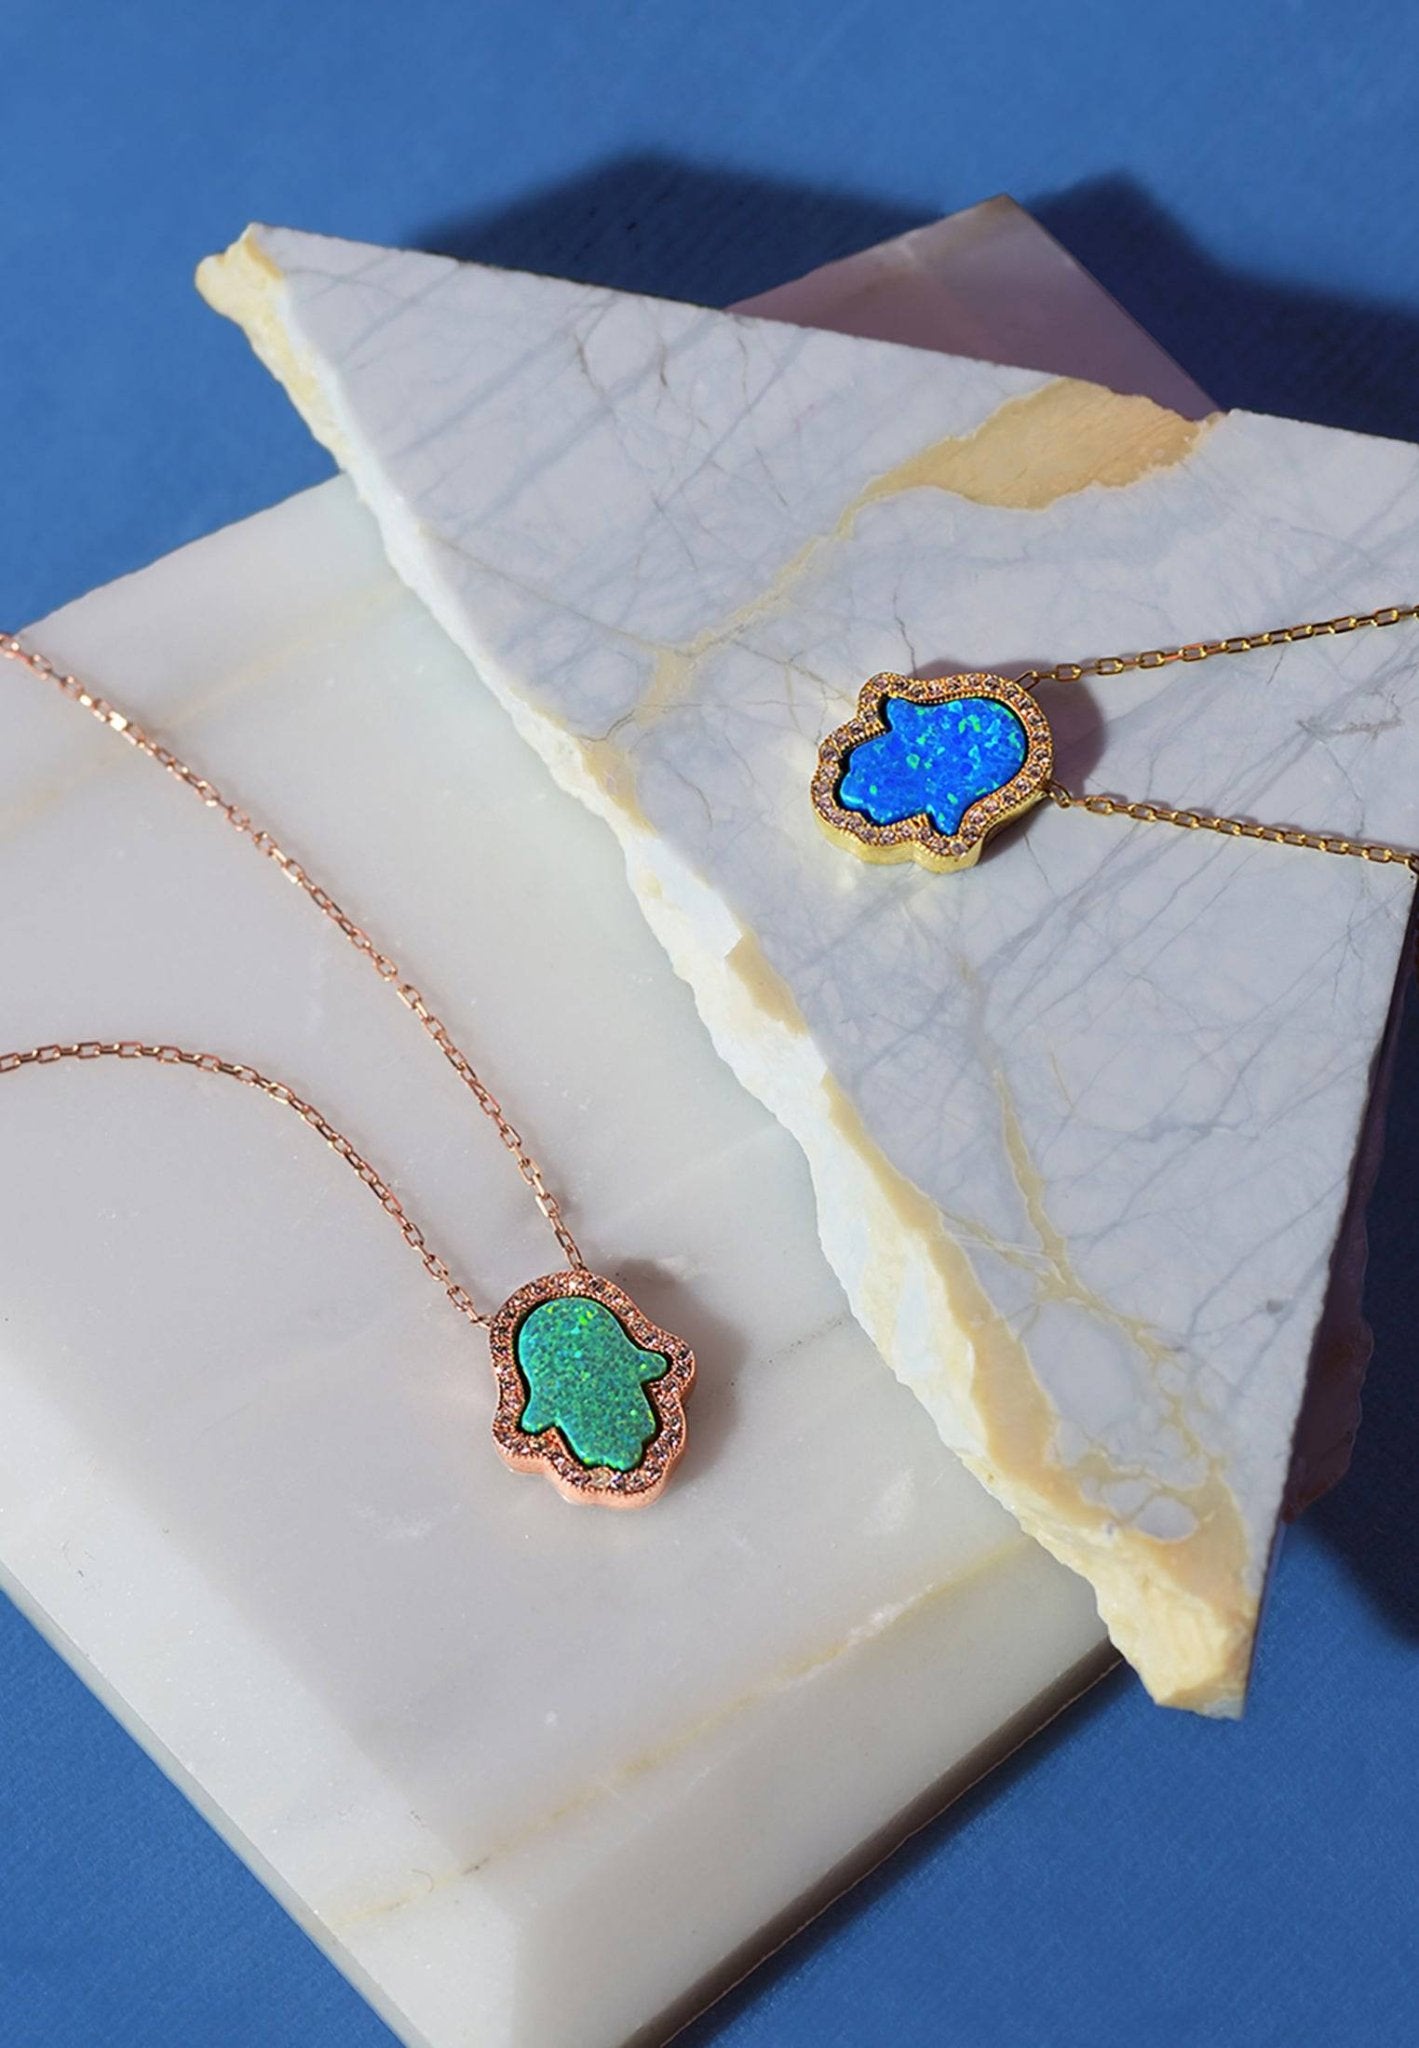 Hamsa Opalite Turquoise Blue Necklace Gold - LATELITA Necklaces